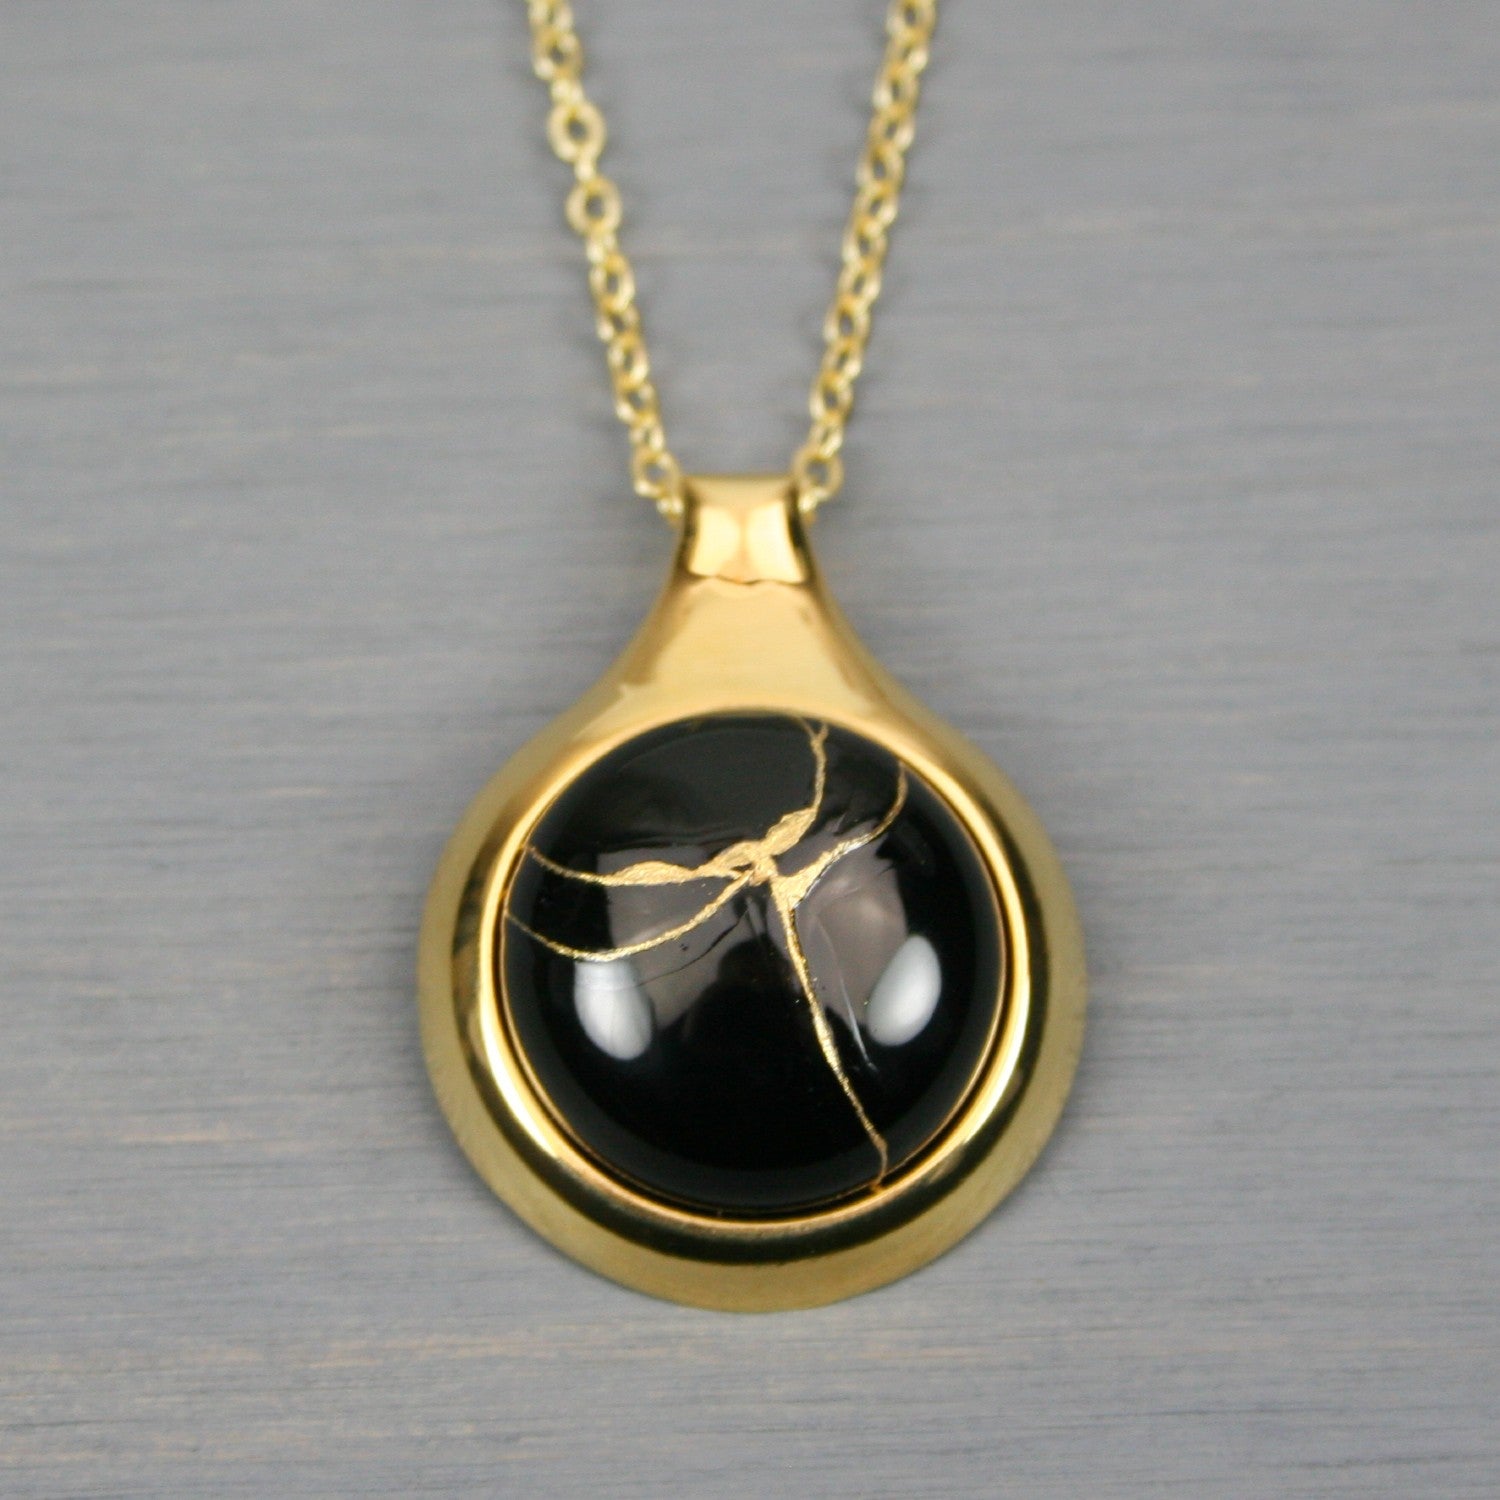 Black onyx kintsugi pendant in a gold setting on chain